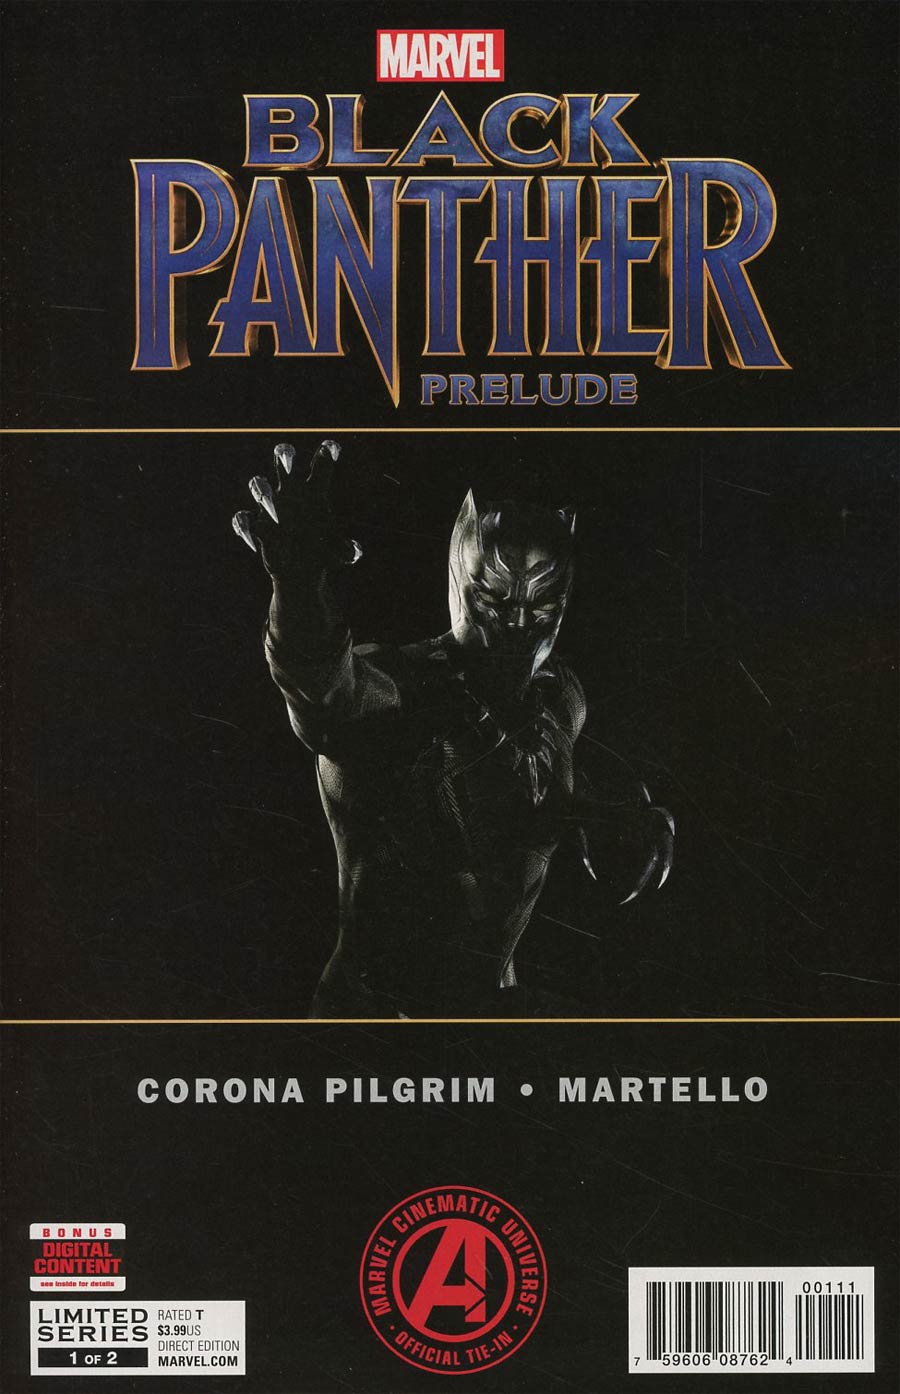 Marvels Black Panther Prelude #1